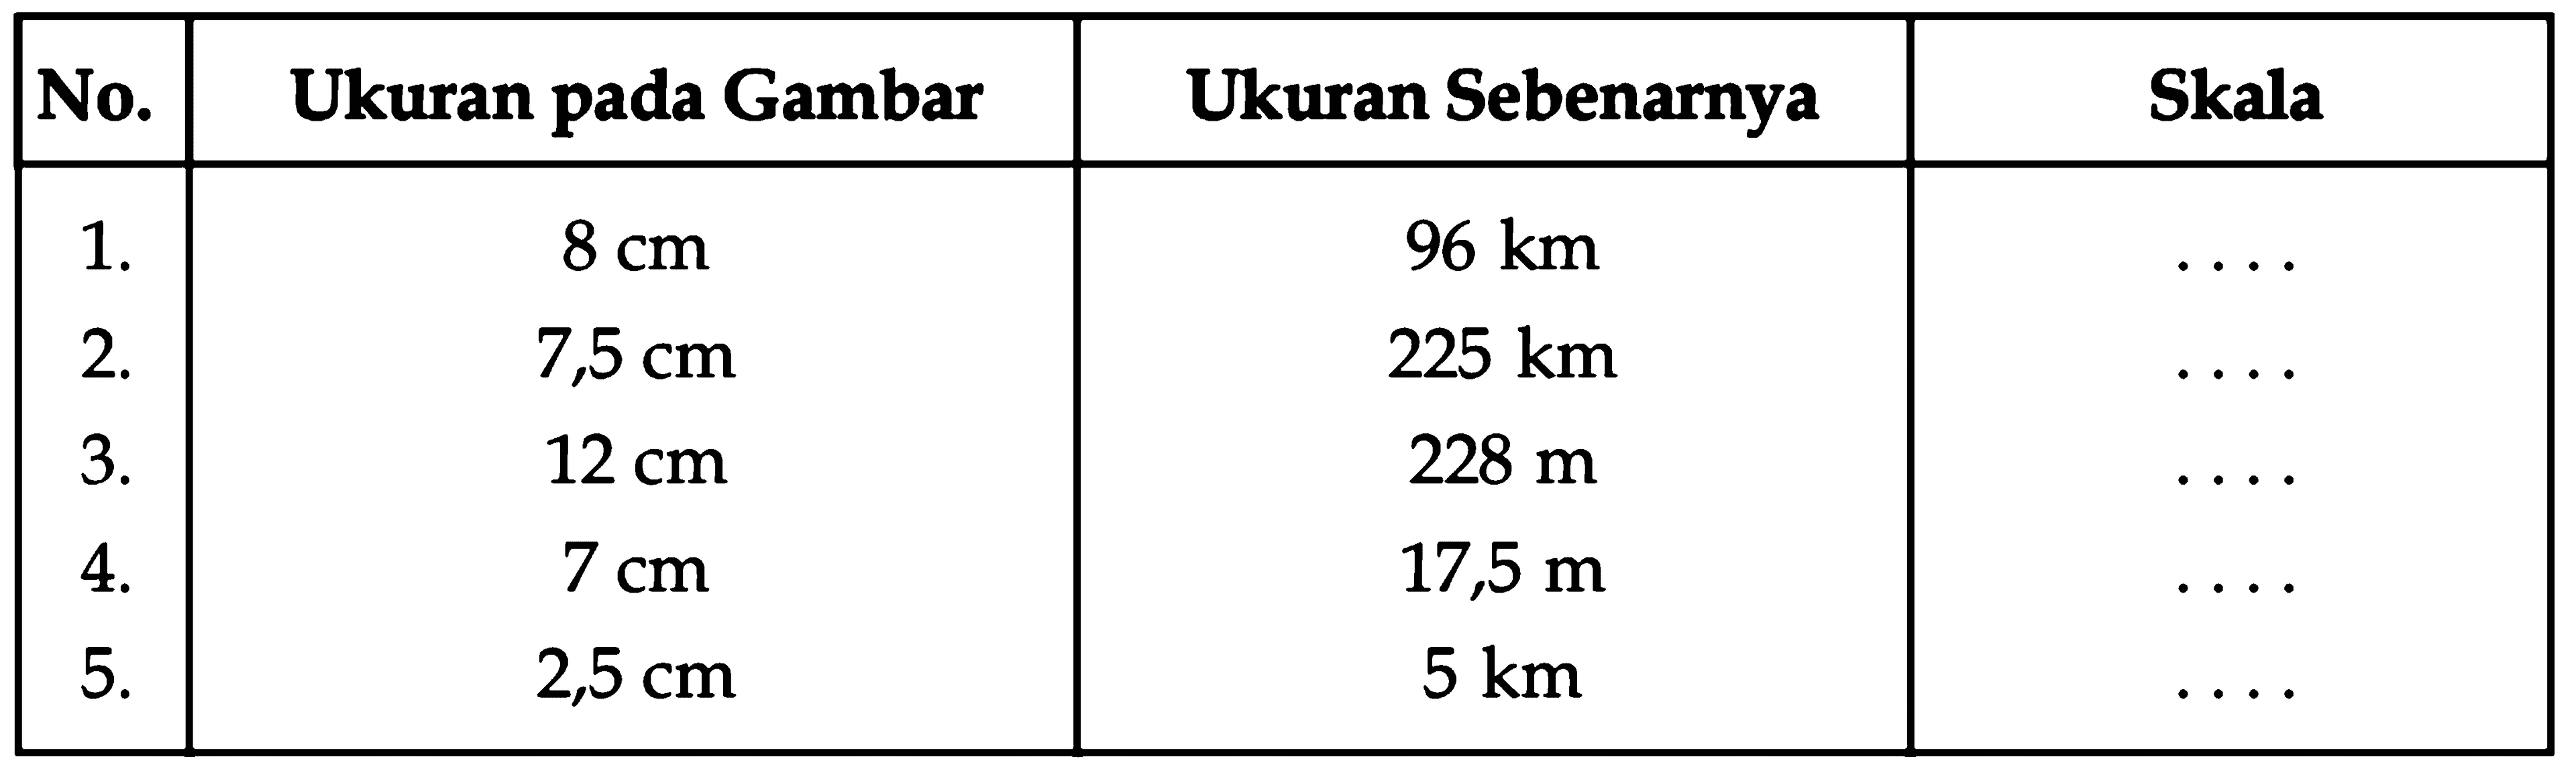 No. Ukuran pada gambar Ukuran sebenarnya Skala 1. 2. 3. 4. 5. 8 cm 7,5 cm 12 cm 7 cm 2,5 cm 96 km 225 km 228 km 17,5 km 5 km